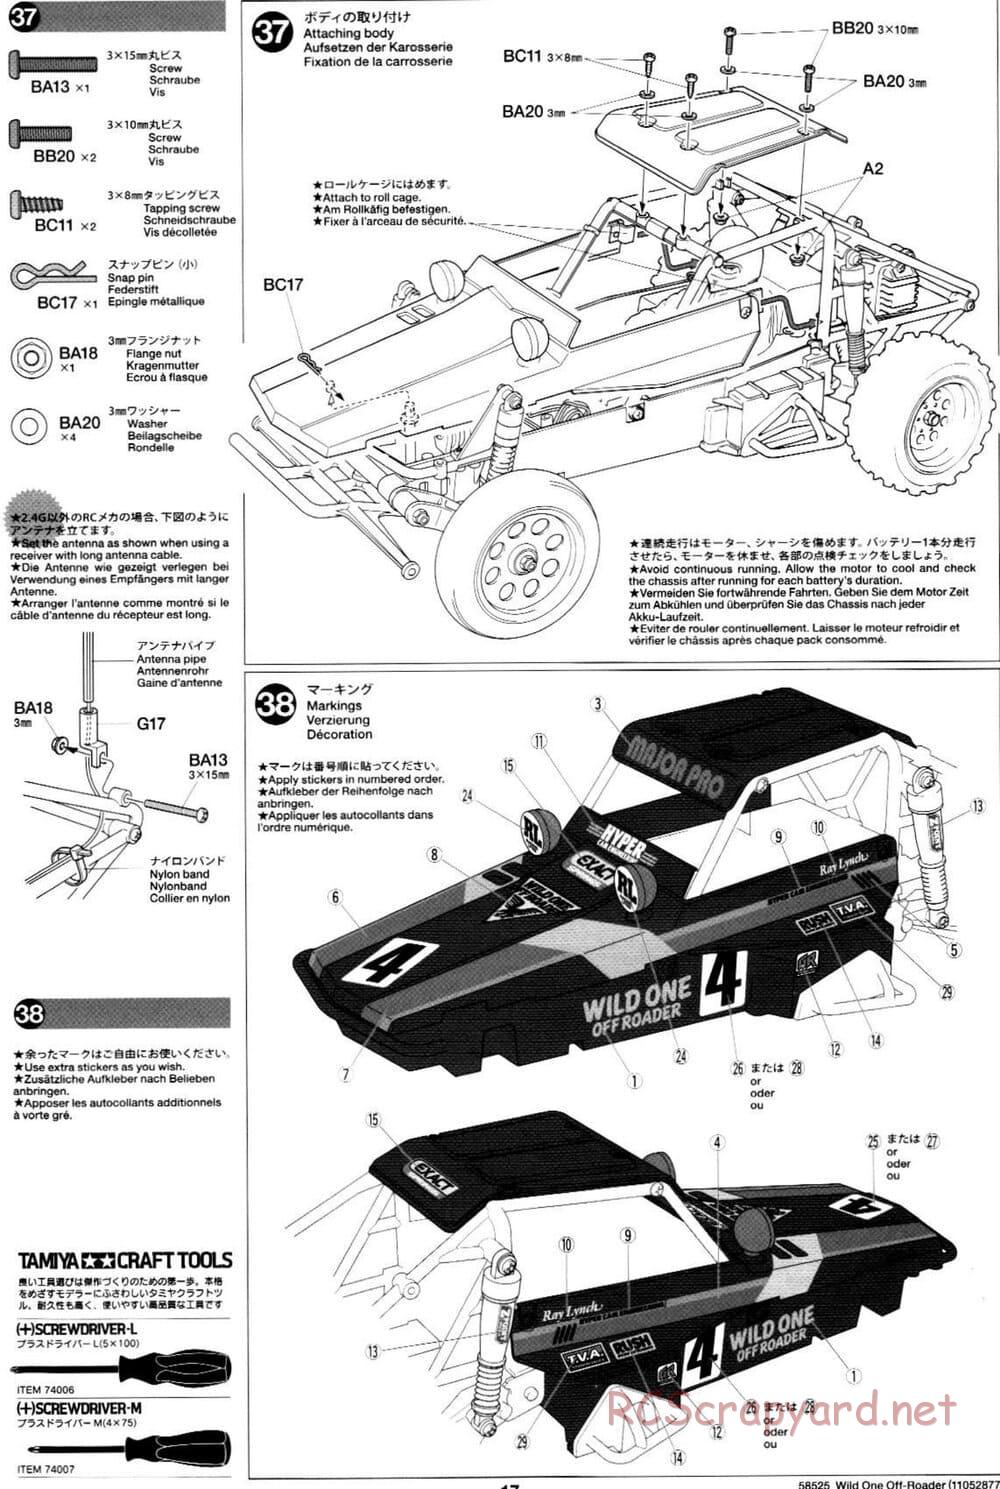 Tamiya - Wild One Off-Roader - FAV Chassis - Manual - Page 17